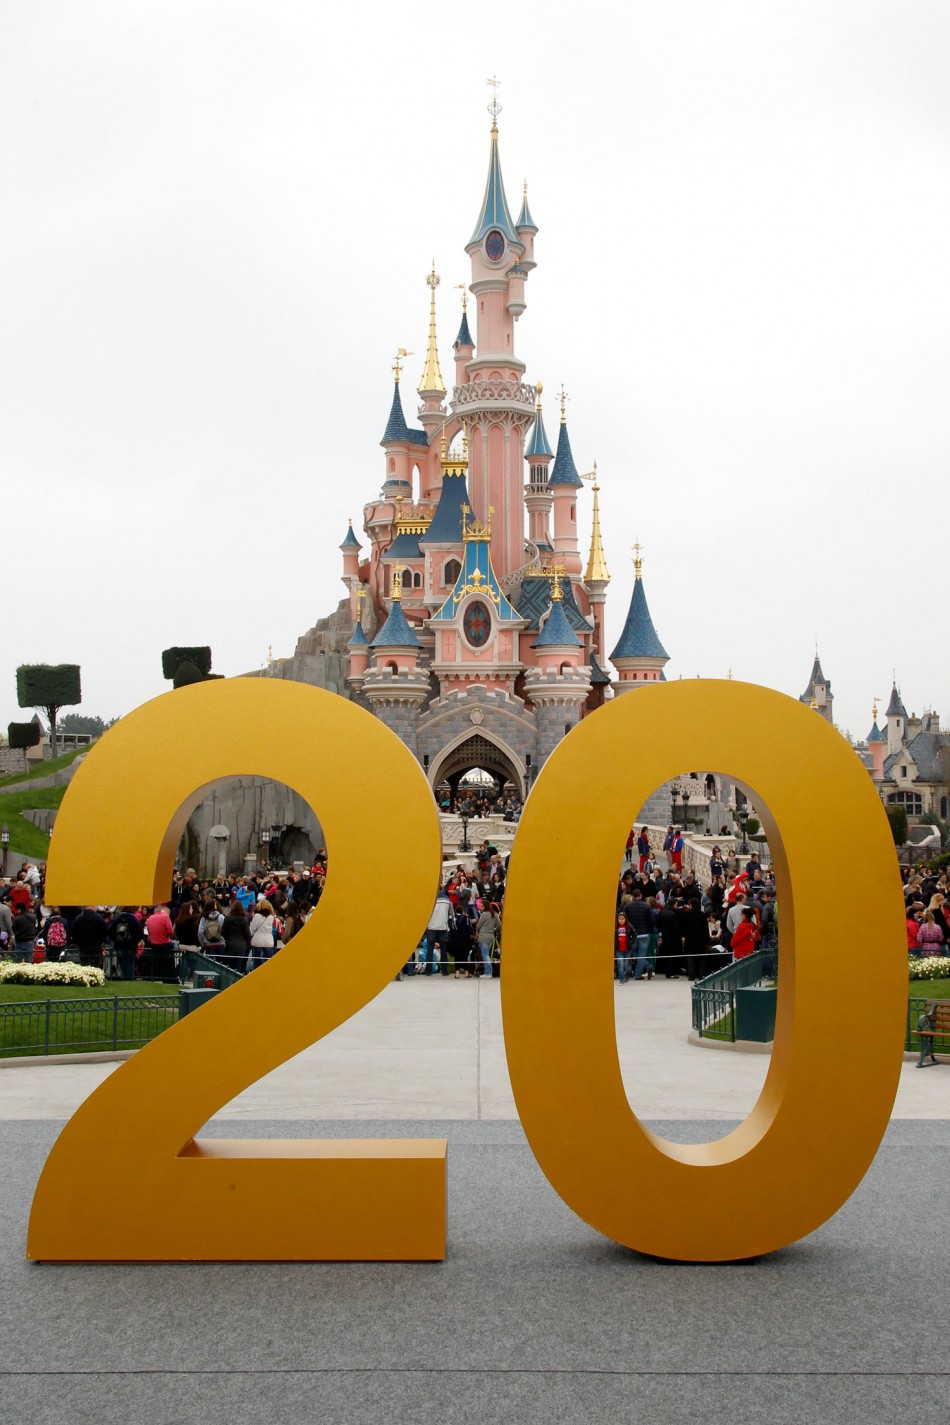 From Salma Hayek to Katie Melua Celebs at 20th Paris Disneyland Resort Anniversary Celebrations